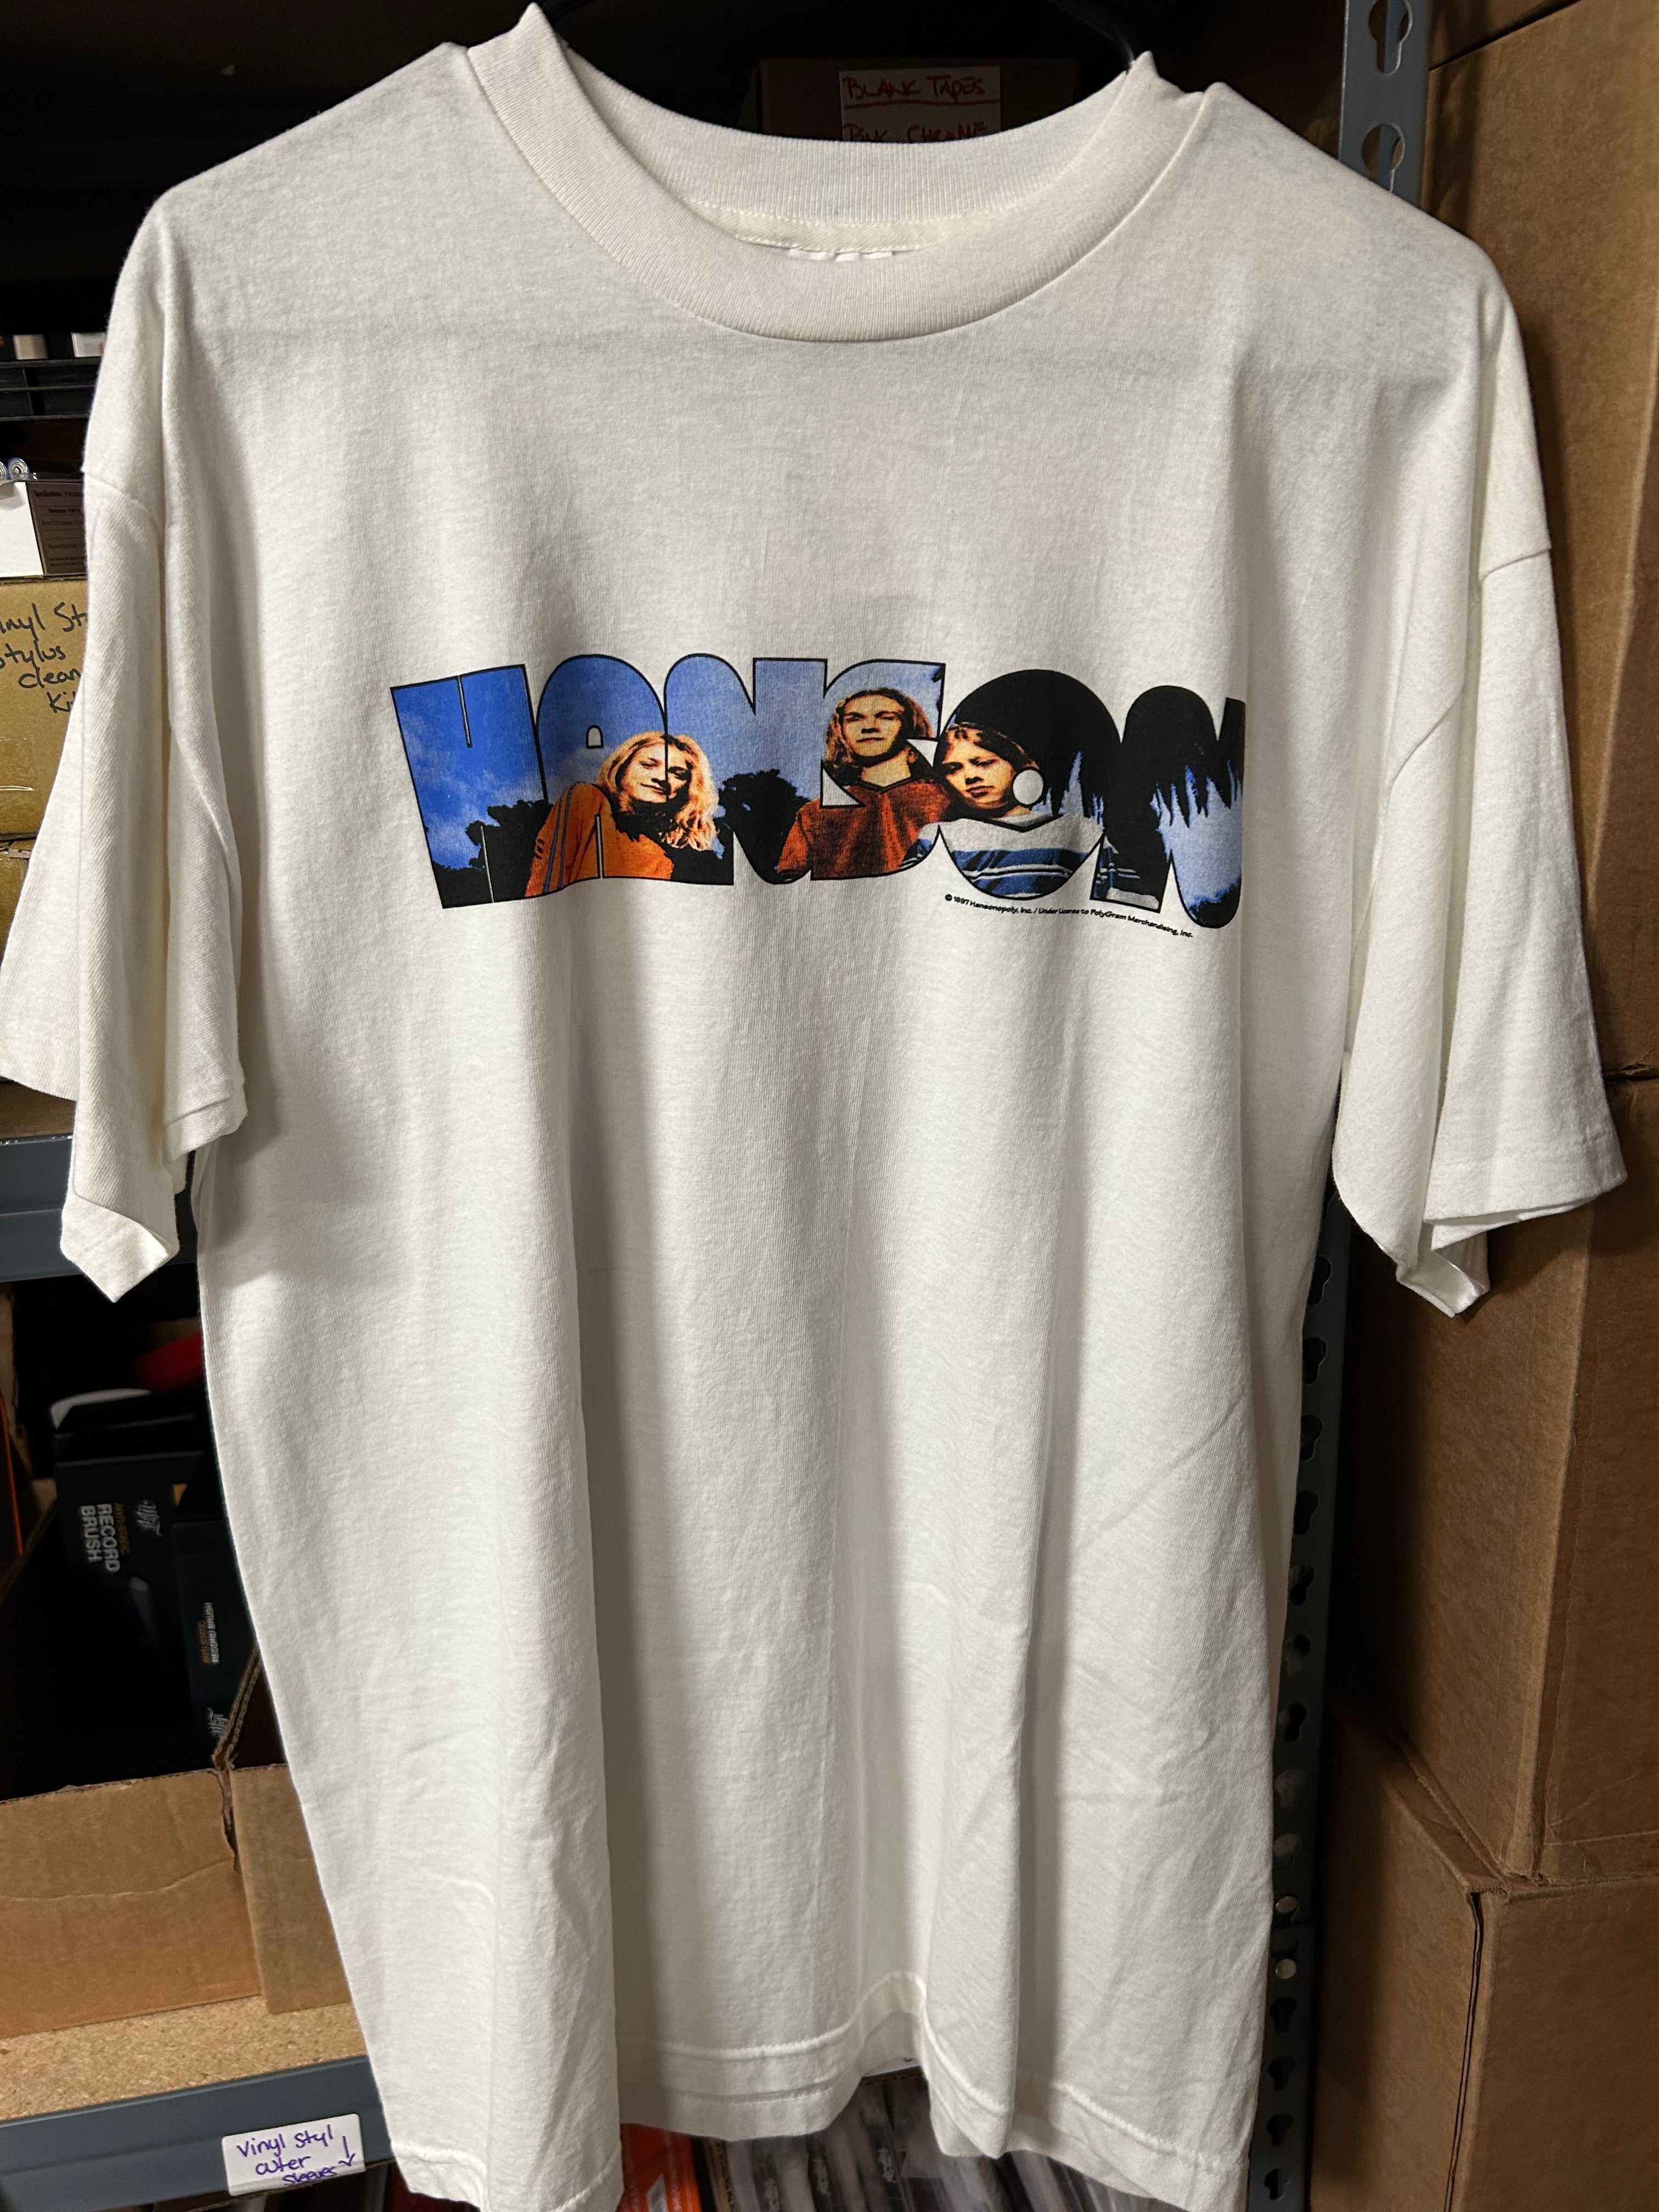 Hanson 1997 Group Shot T-Shirt, White, L